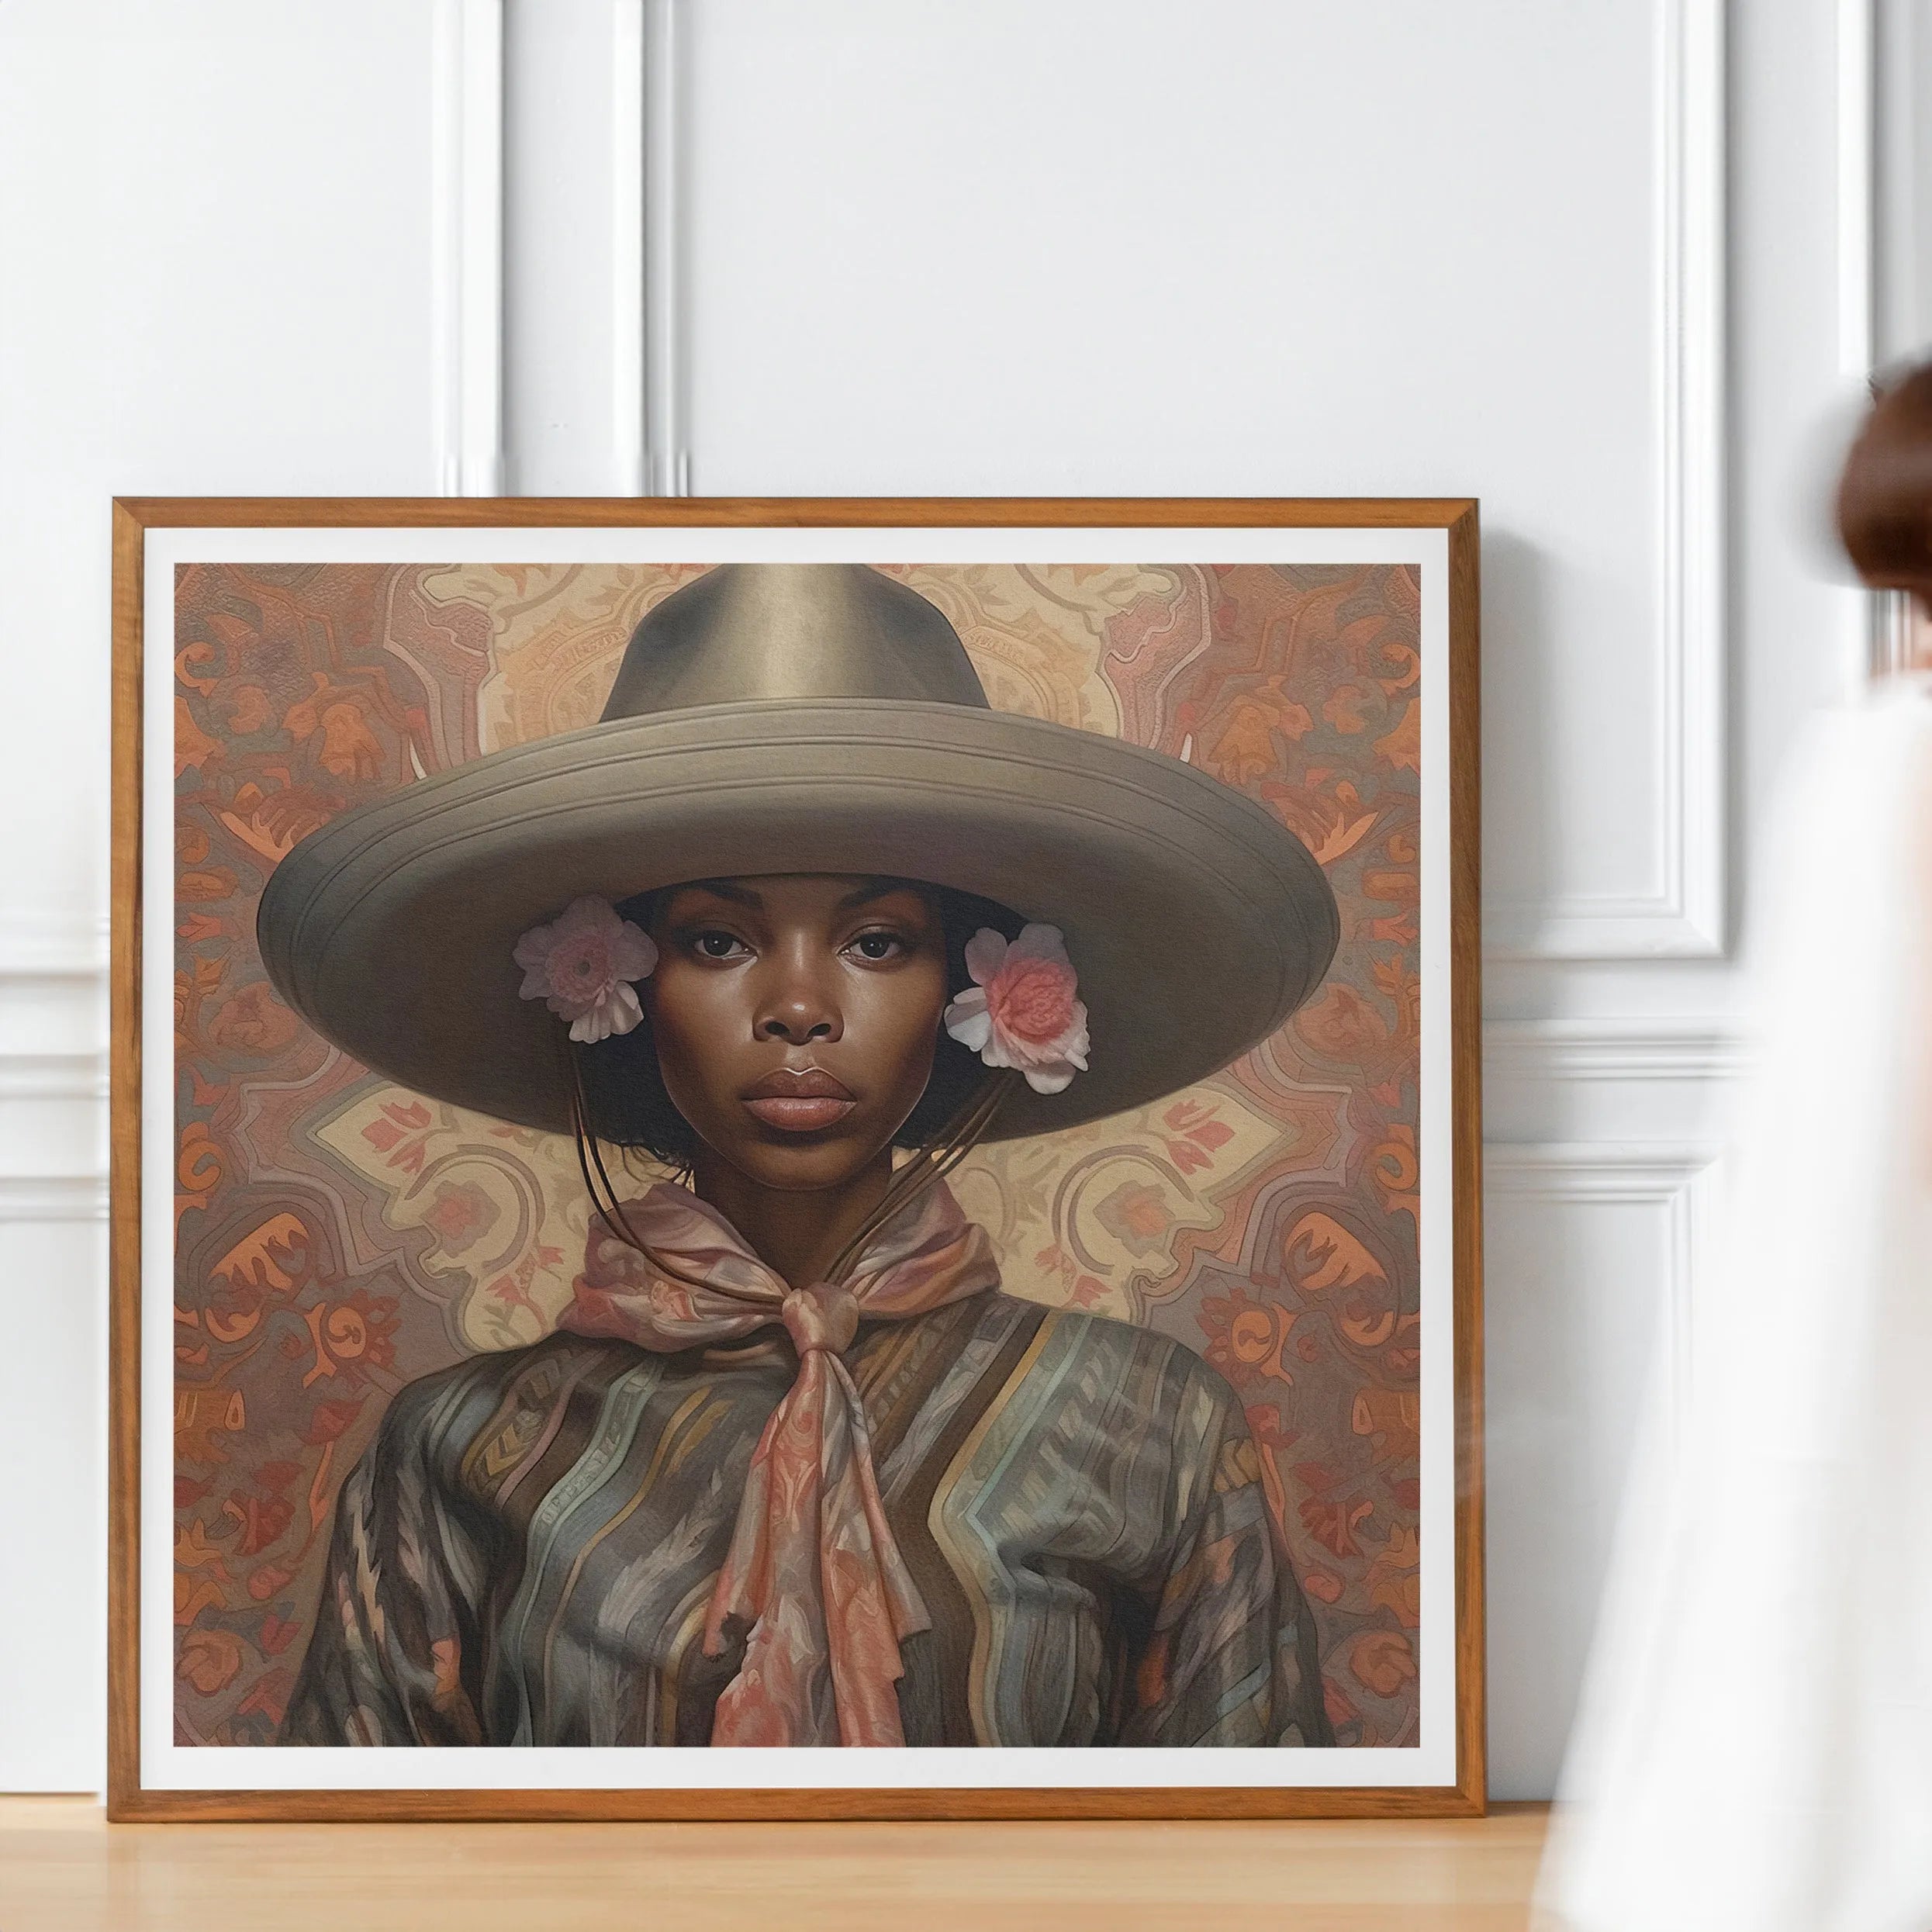 Sadie - Lesbian Black Cowgirl Art Print - Wlw Sapphic Femme - 40’x40’ - Posters Prints & Visual Artwork - Aesthetic Art